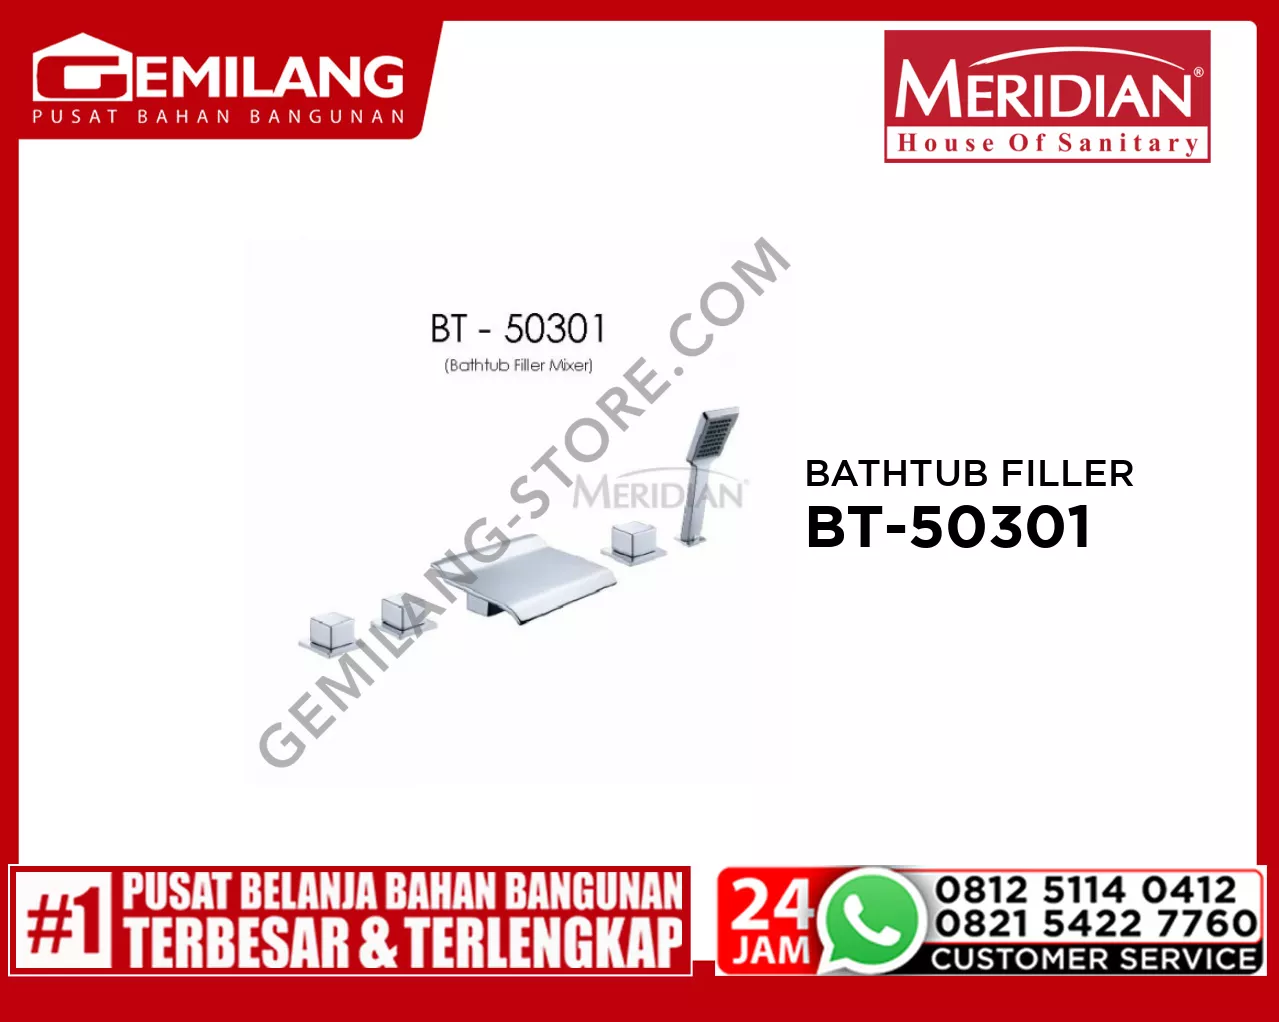 MERIDIAN 5 PCS BATHTUB WATERFALL (MED) BT-50301